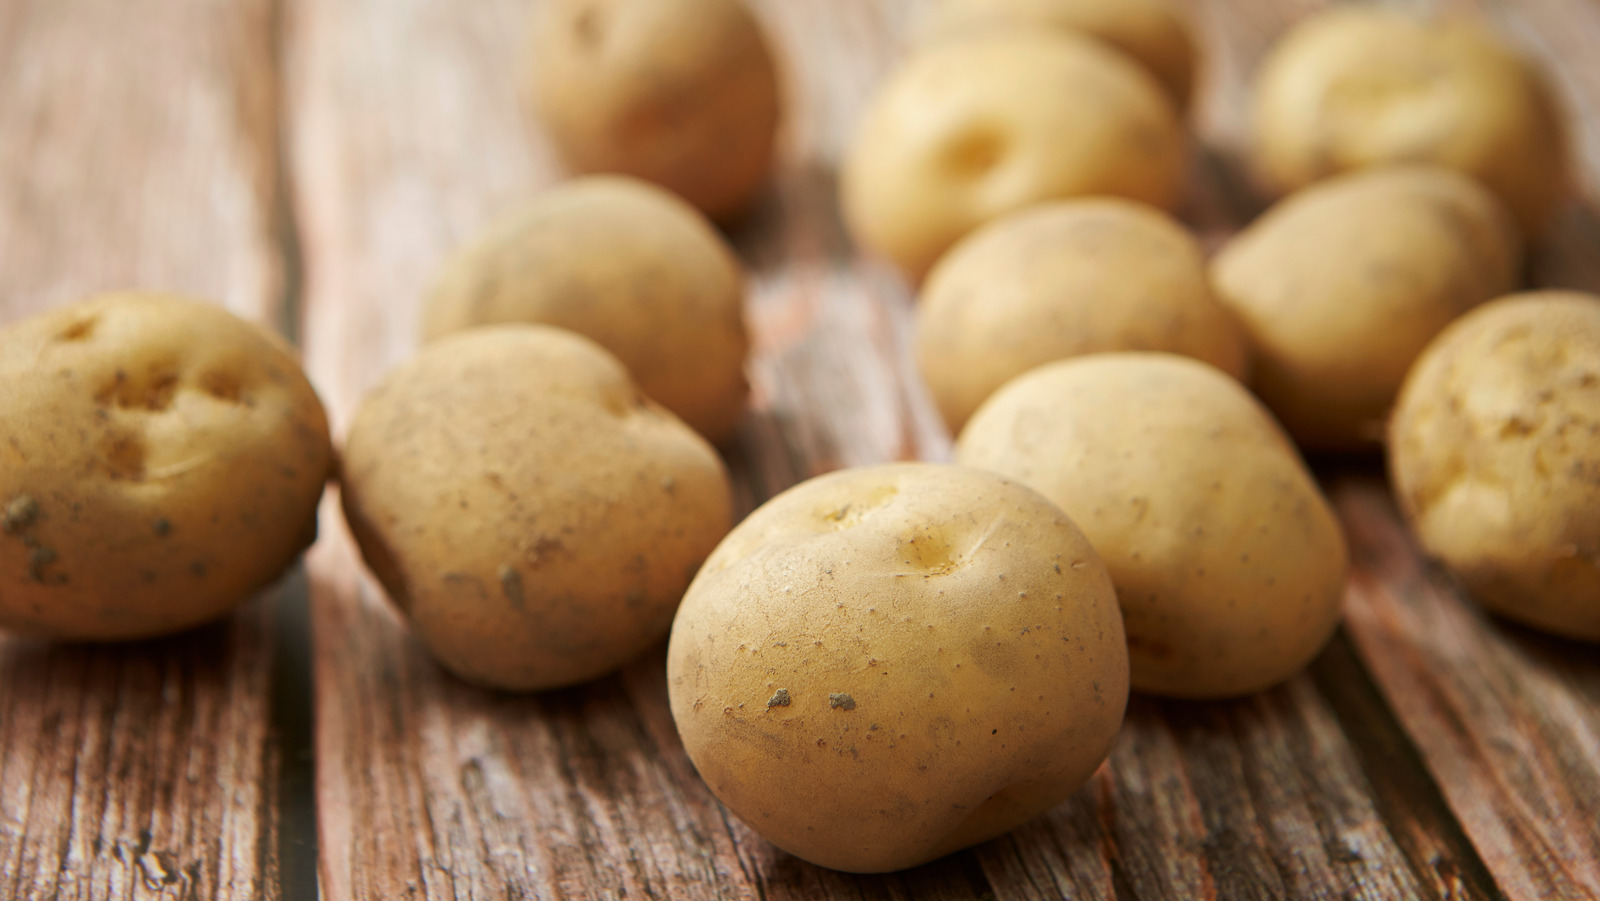 Can You Eat Raw Potatoes?